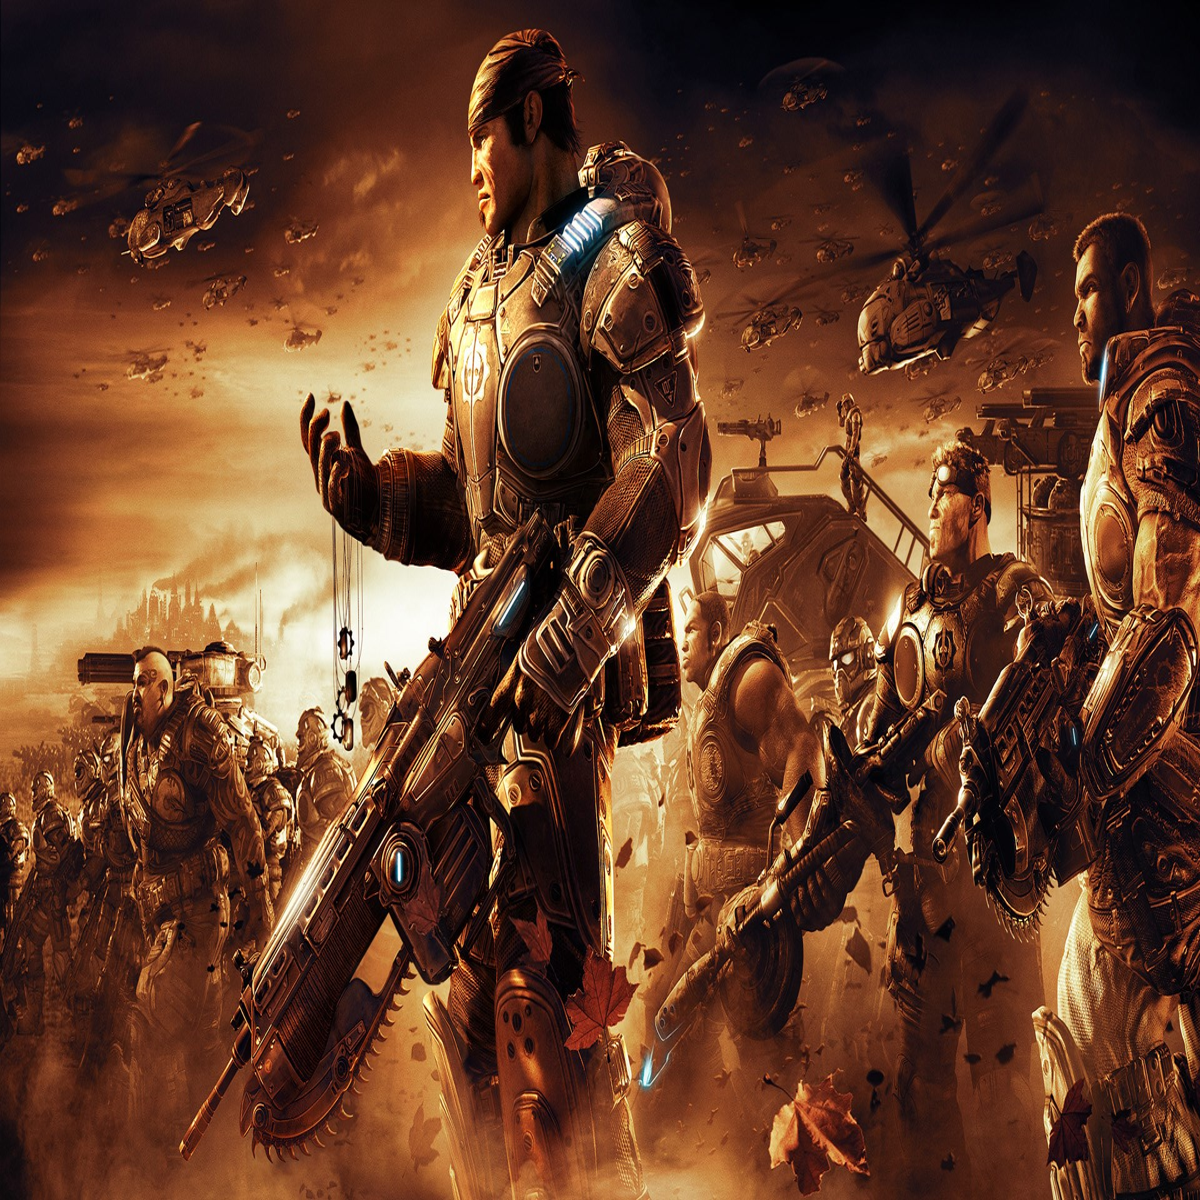 Gears of War 4 - Launch Trailer 